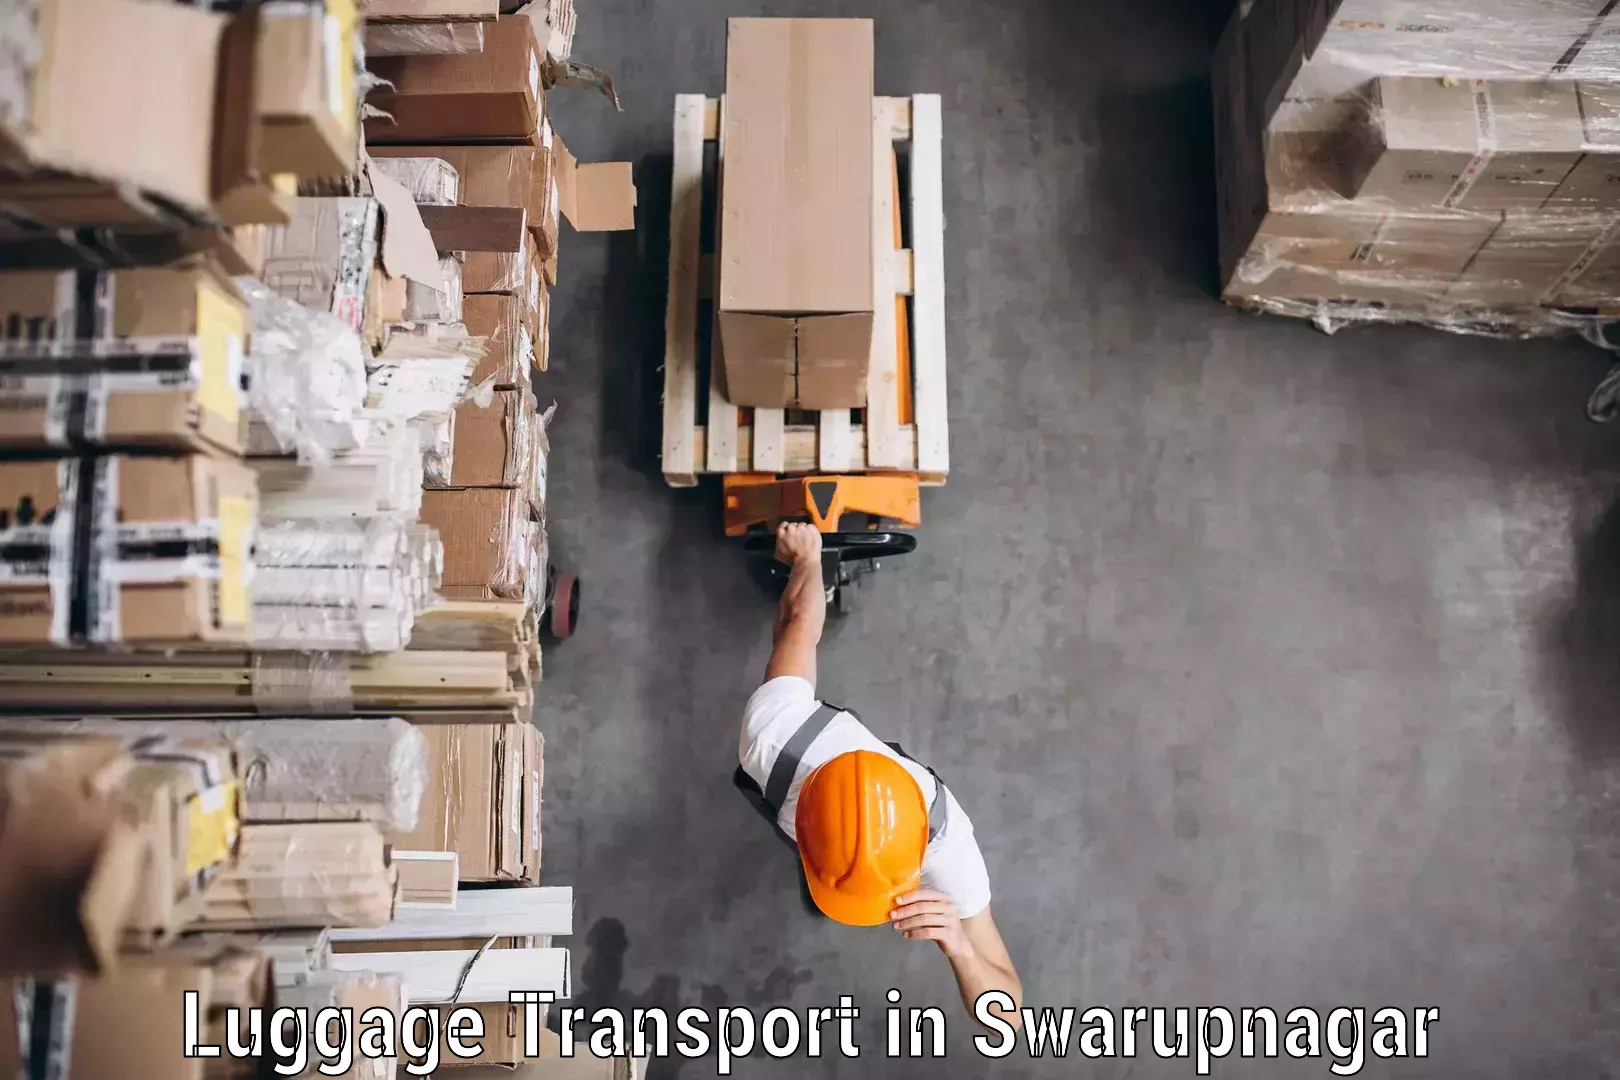 Baggage shipping experience in Swarupnagar